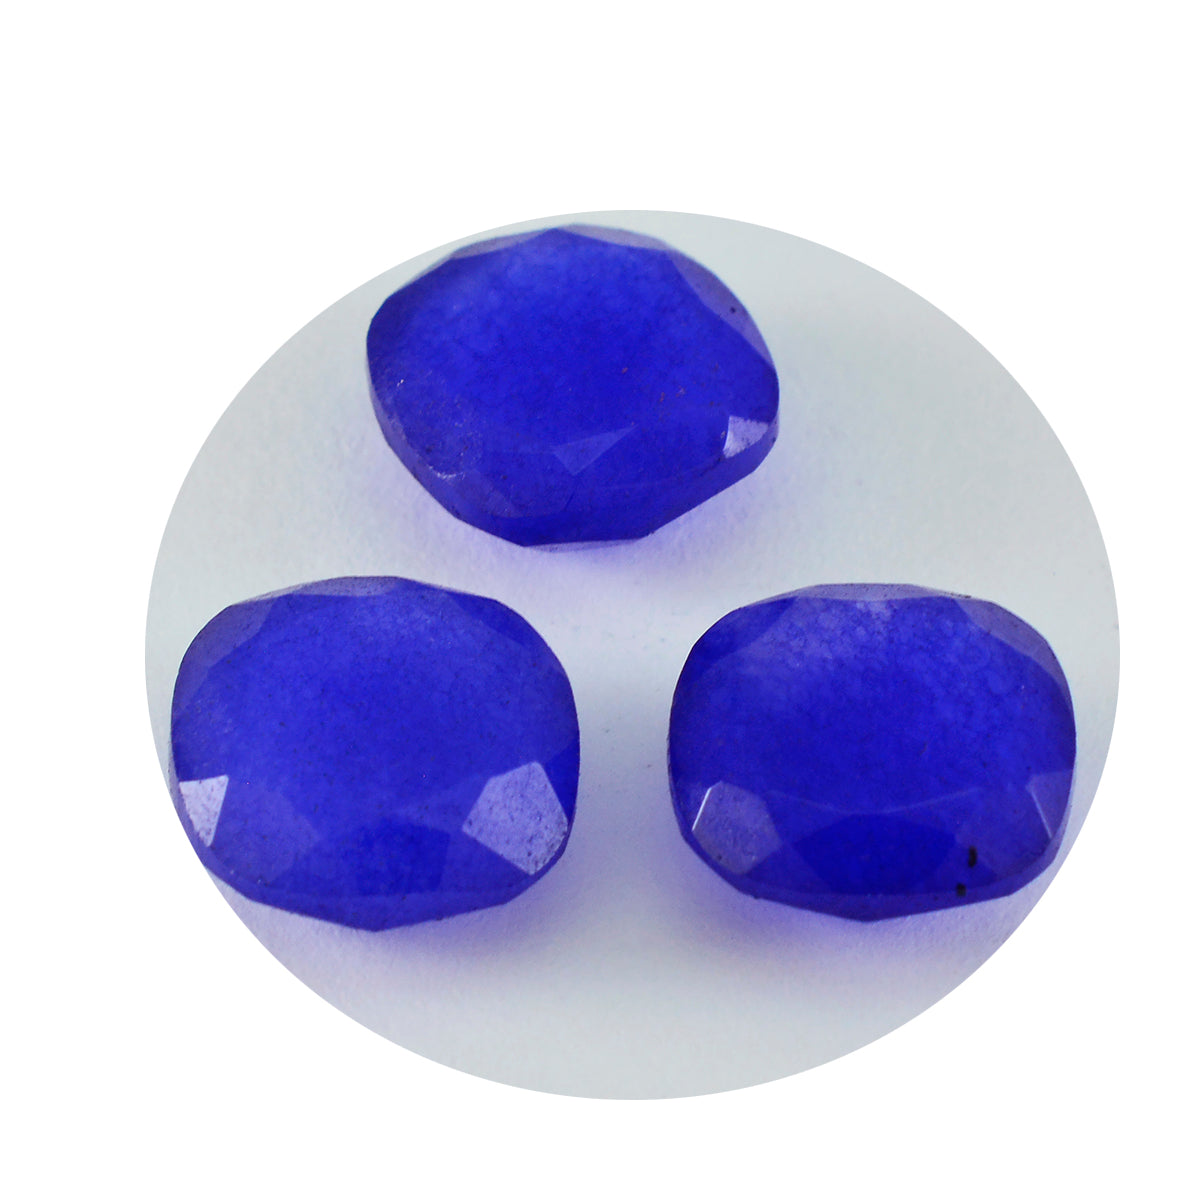 Riyogems 1 Stück echter blauer Jaspis, facettiert, 11 x 11 mm, Kissenform, A1-Qualitäts-Edelstein